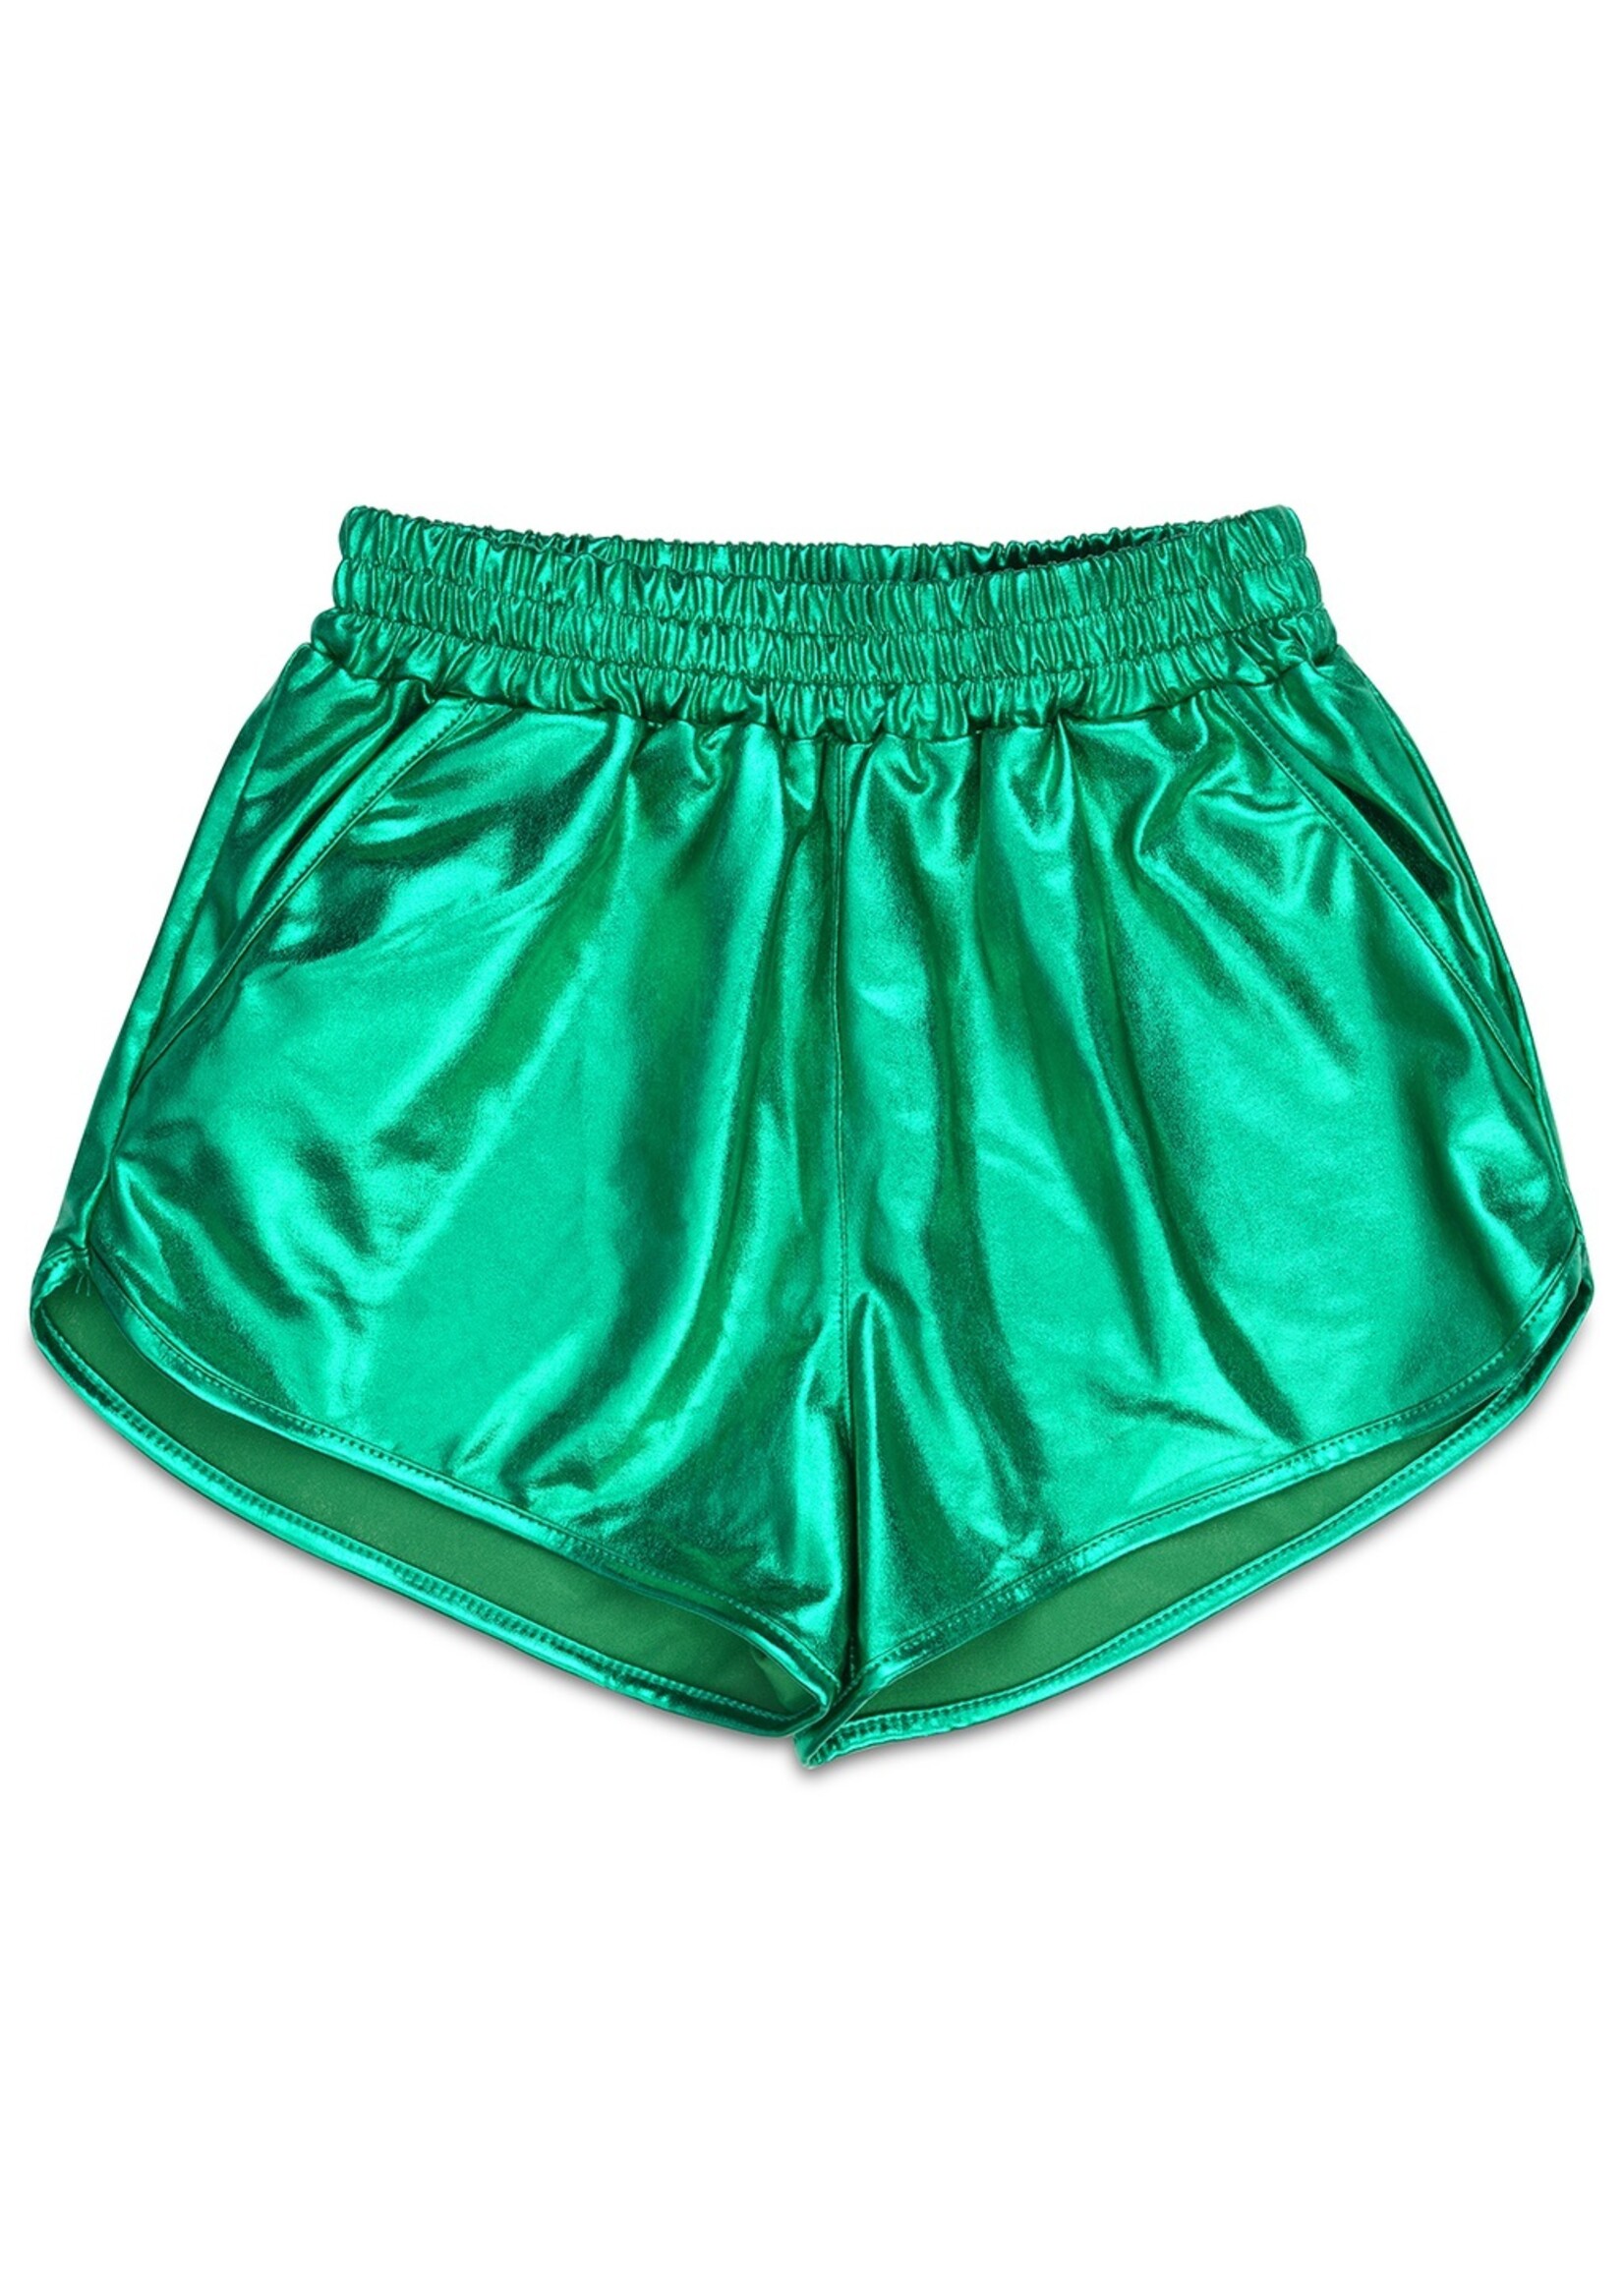 Iscream iScream Green Metallic Shorts